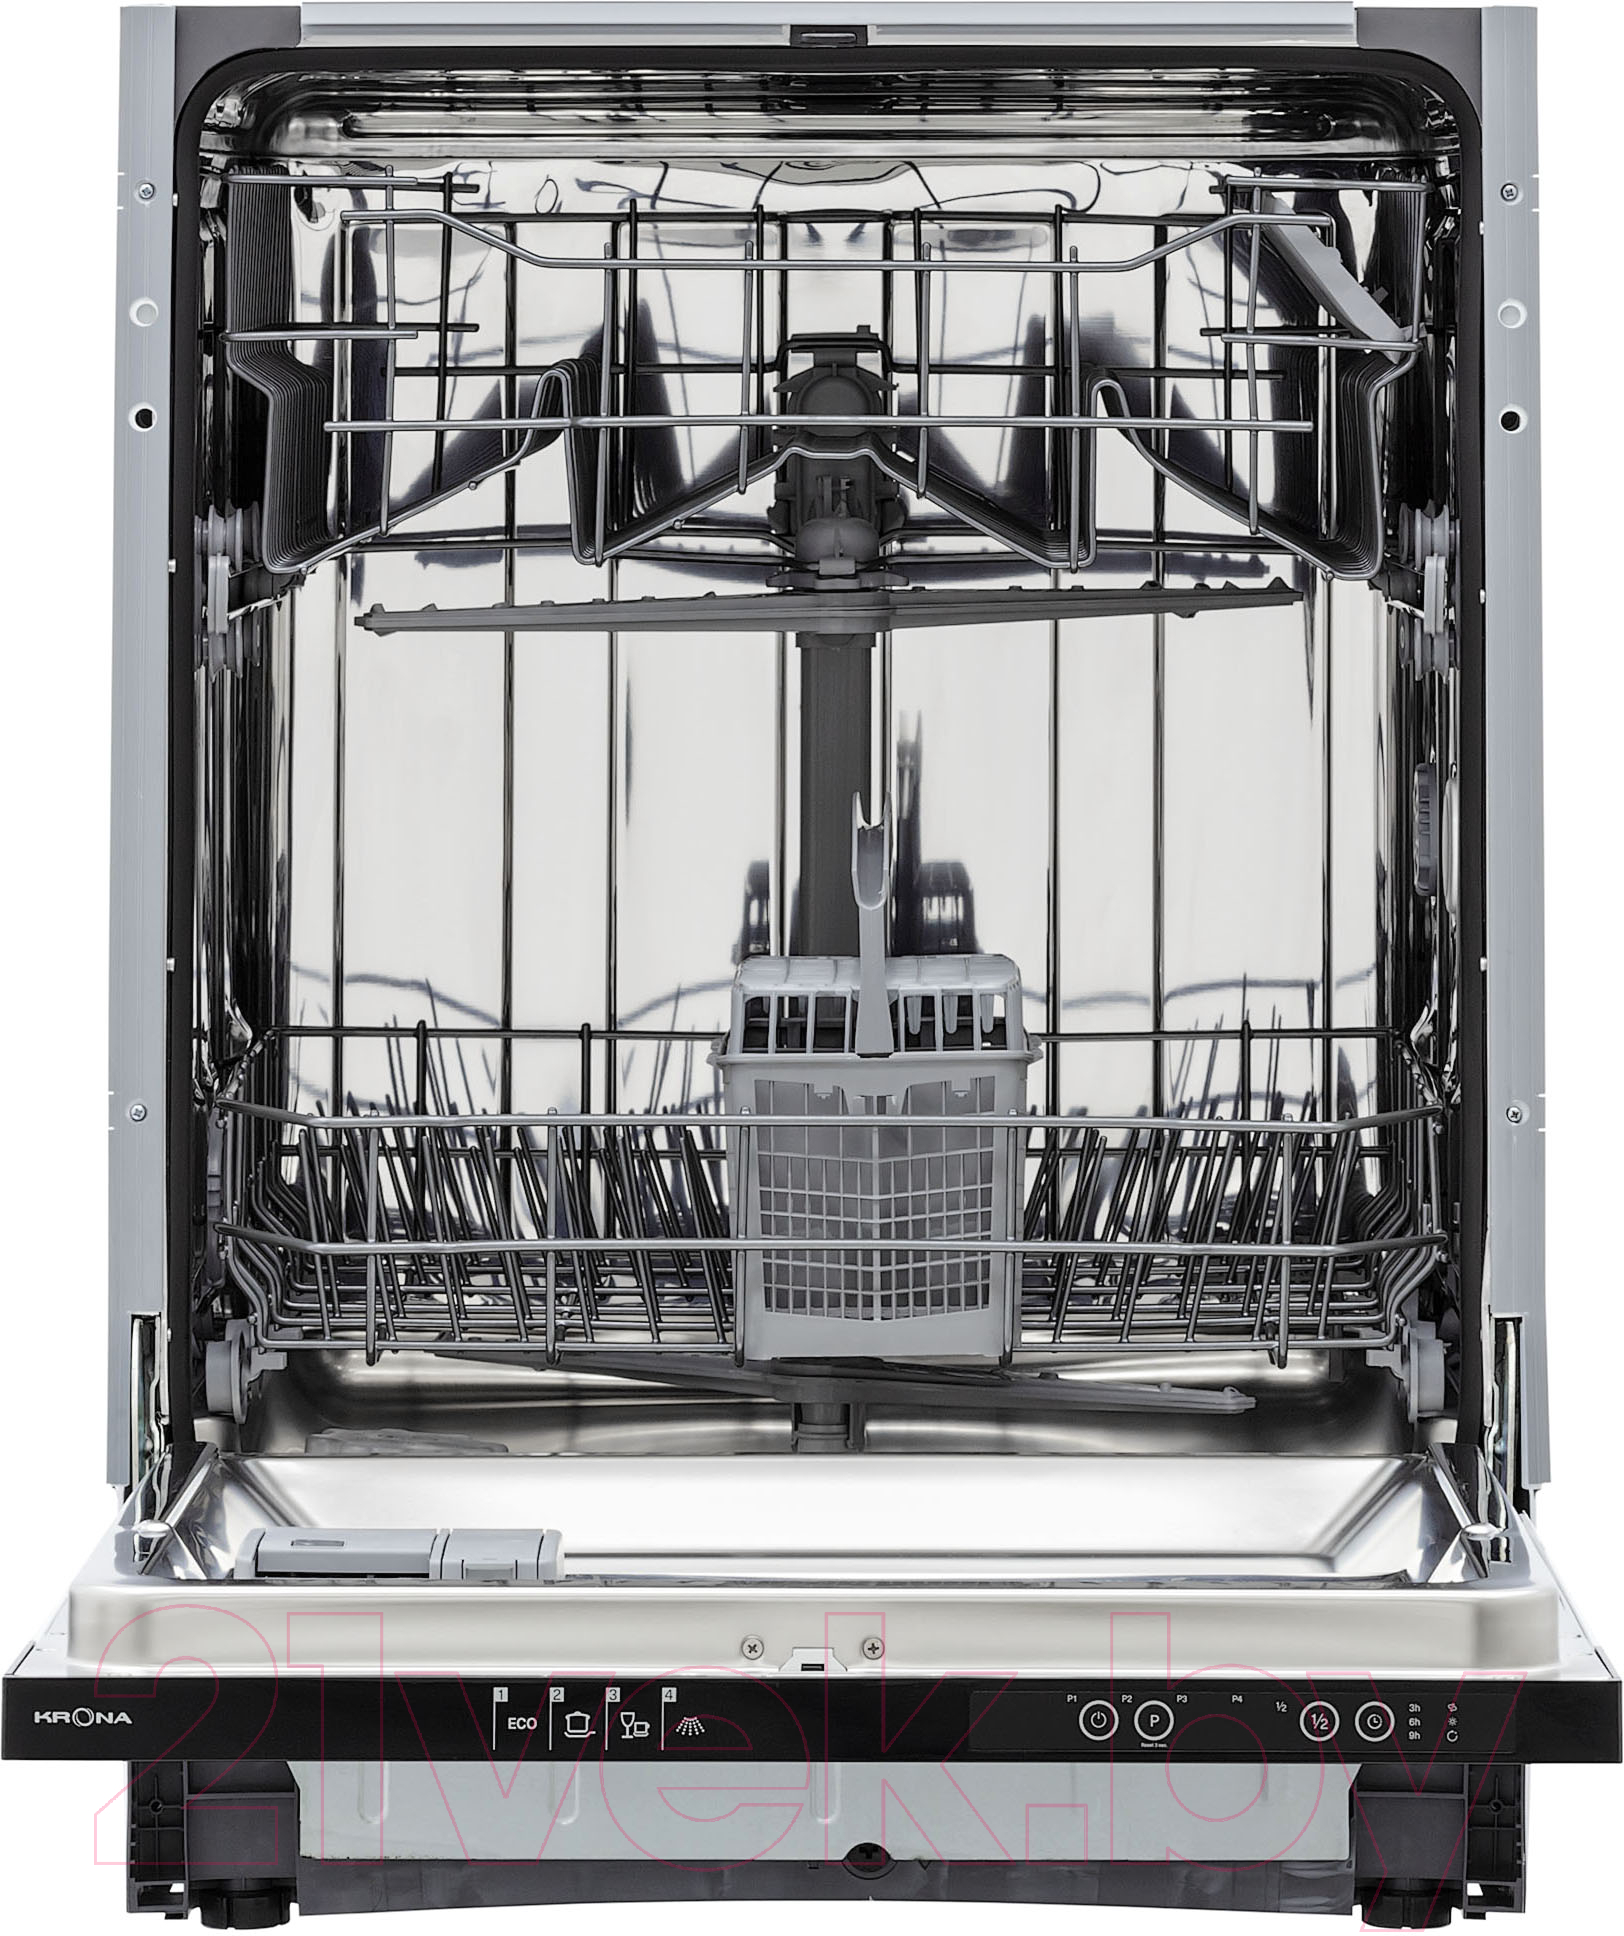 Посудомоечная машина Krona Ammer 60 BI K / КА-00005350